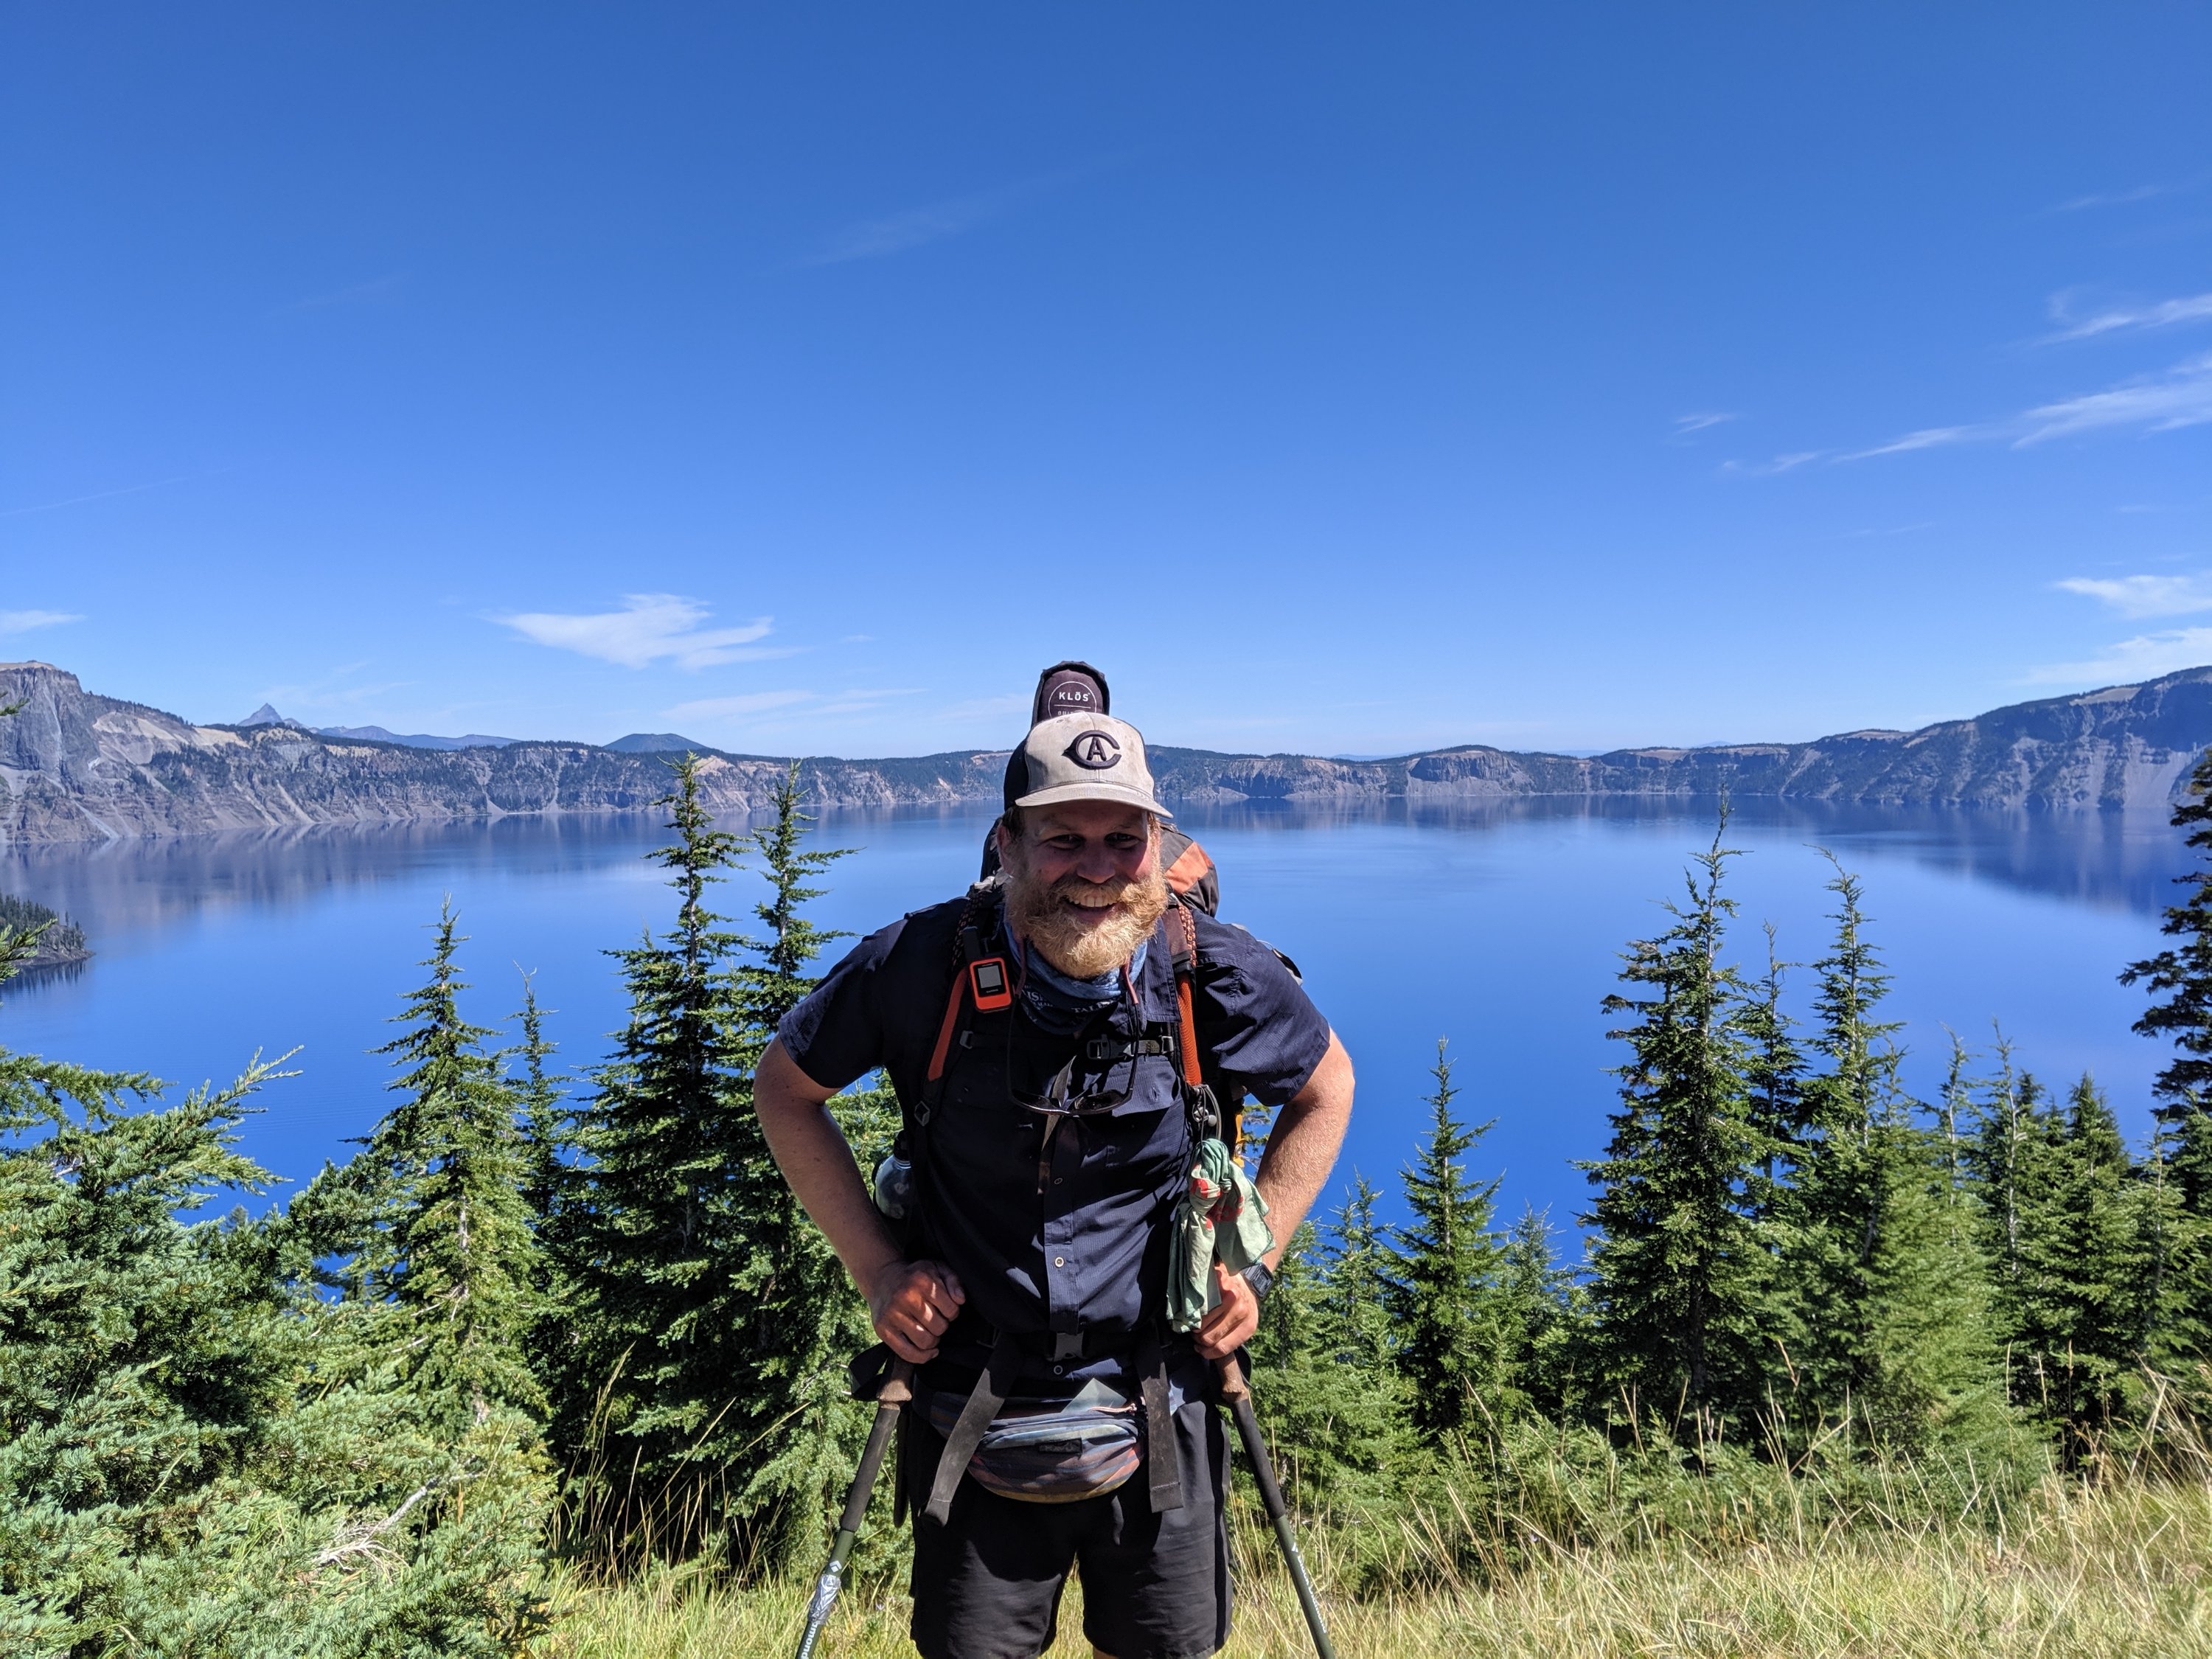 Soren standing in front of Crater Lake